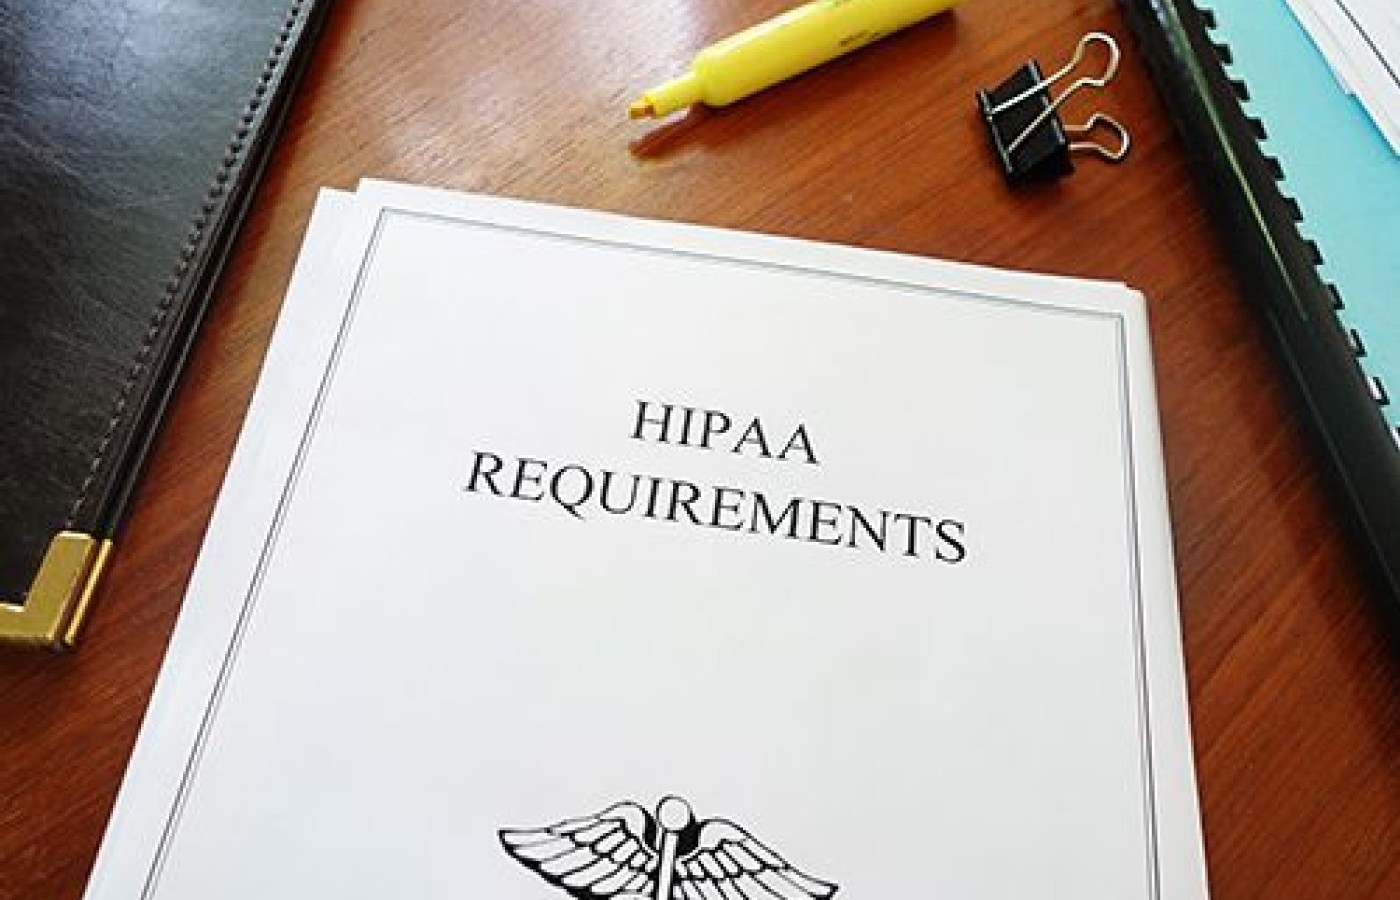 hipaa requirements